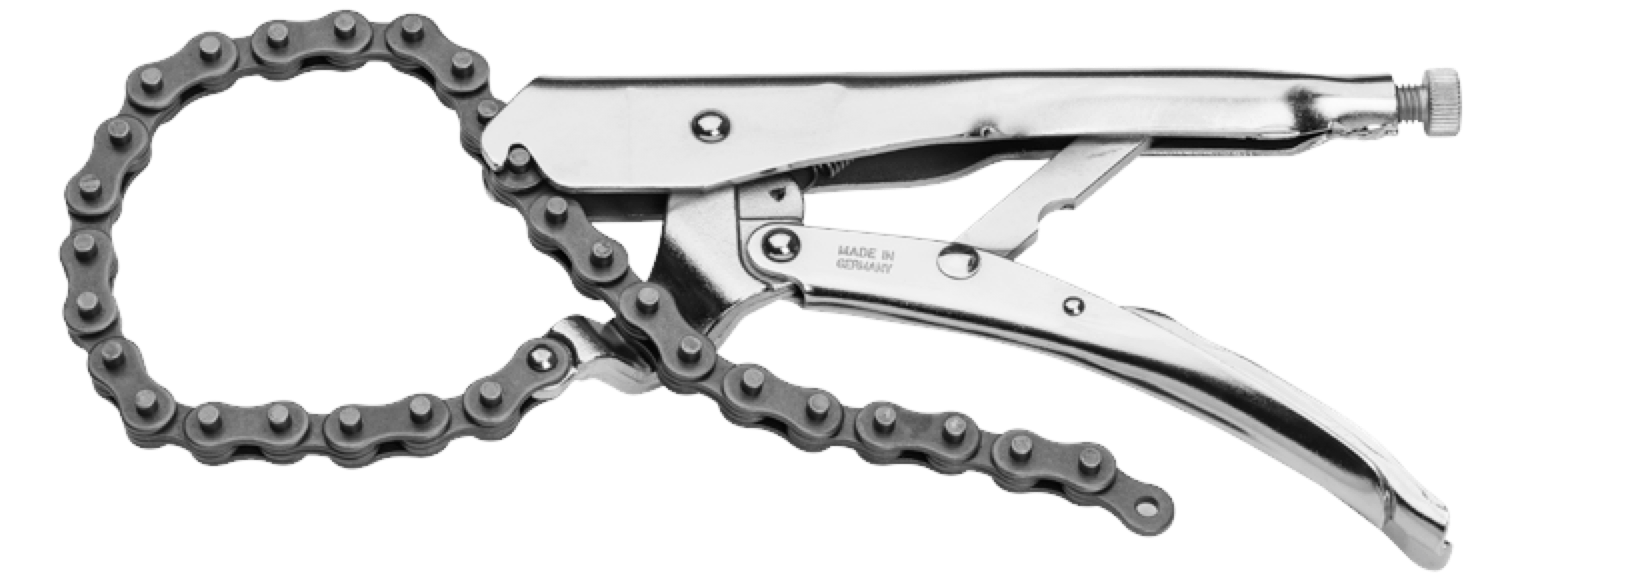 ELORA 524 Chain Grip Plier (ELORA Tools) - Premium Chain Grip Plier from ELORA - Shop now at Yew Aik.